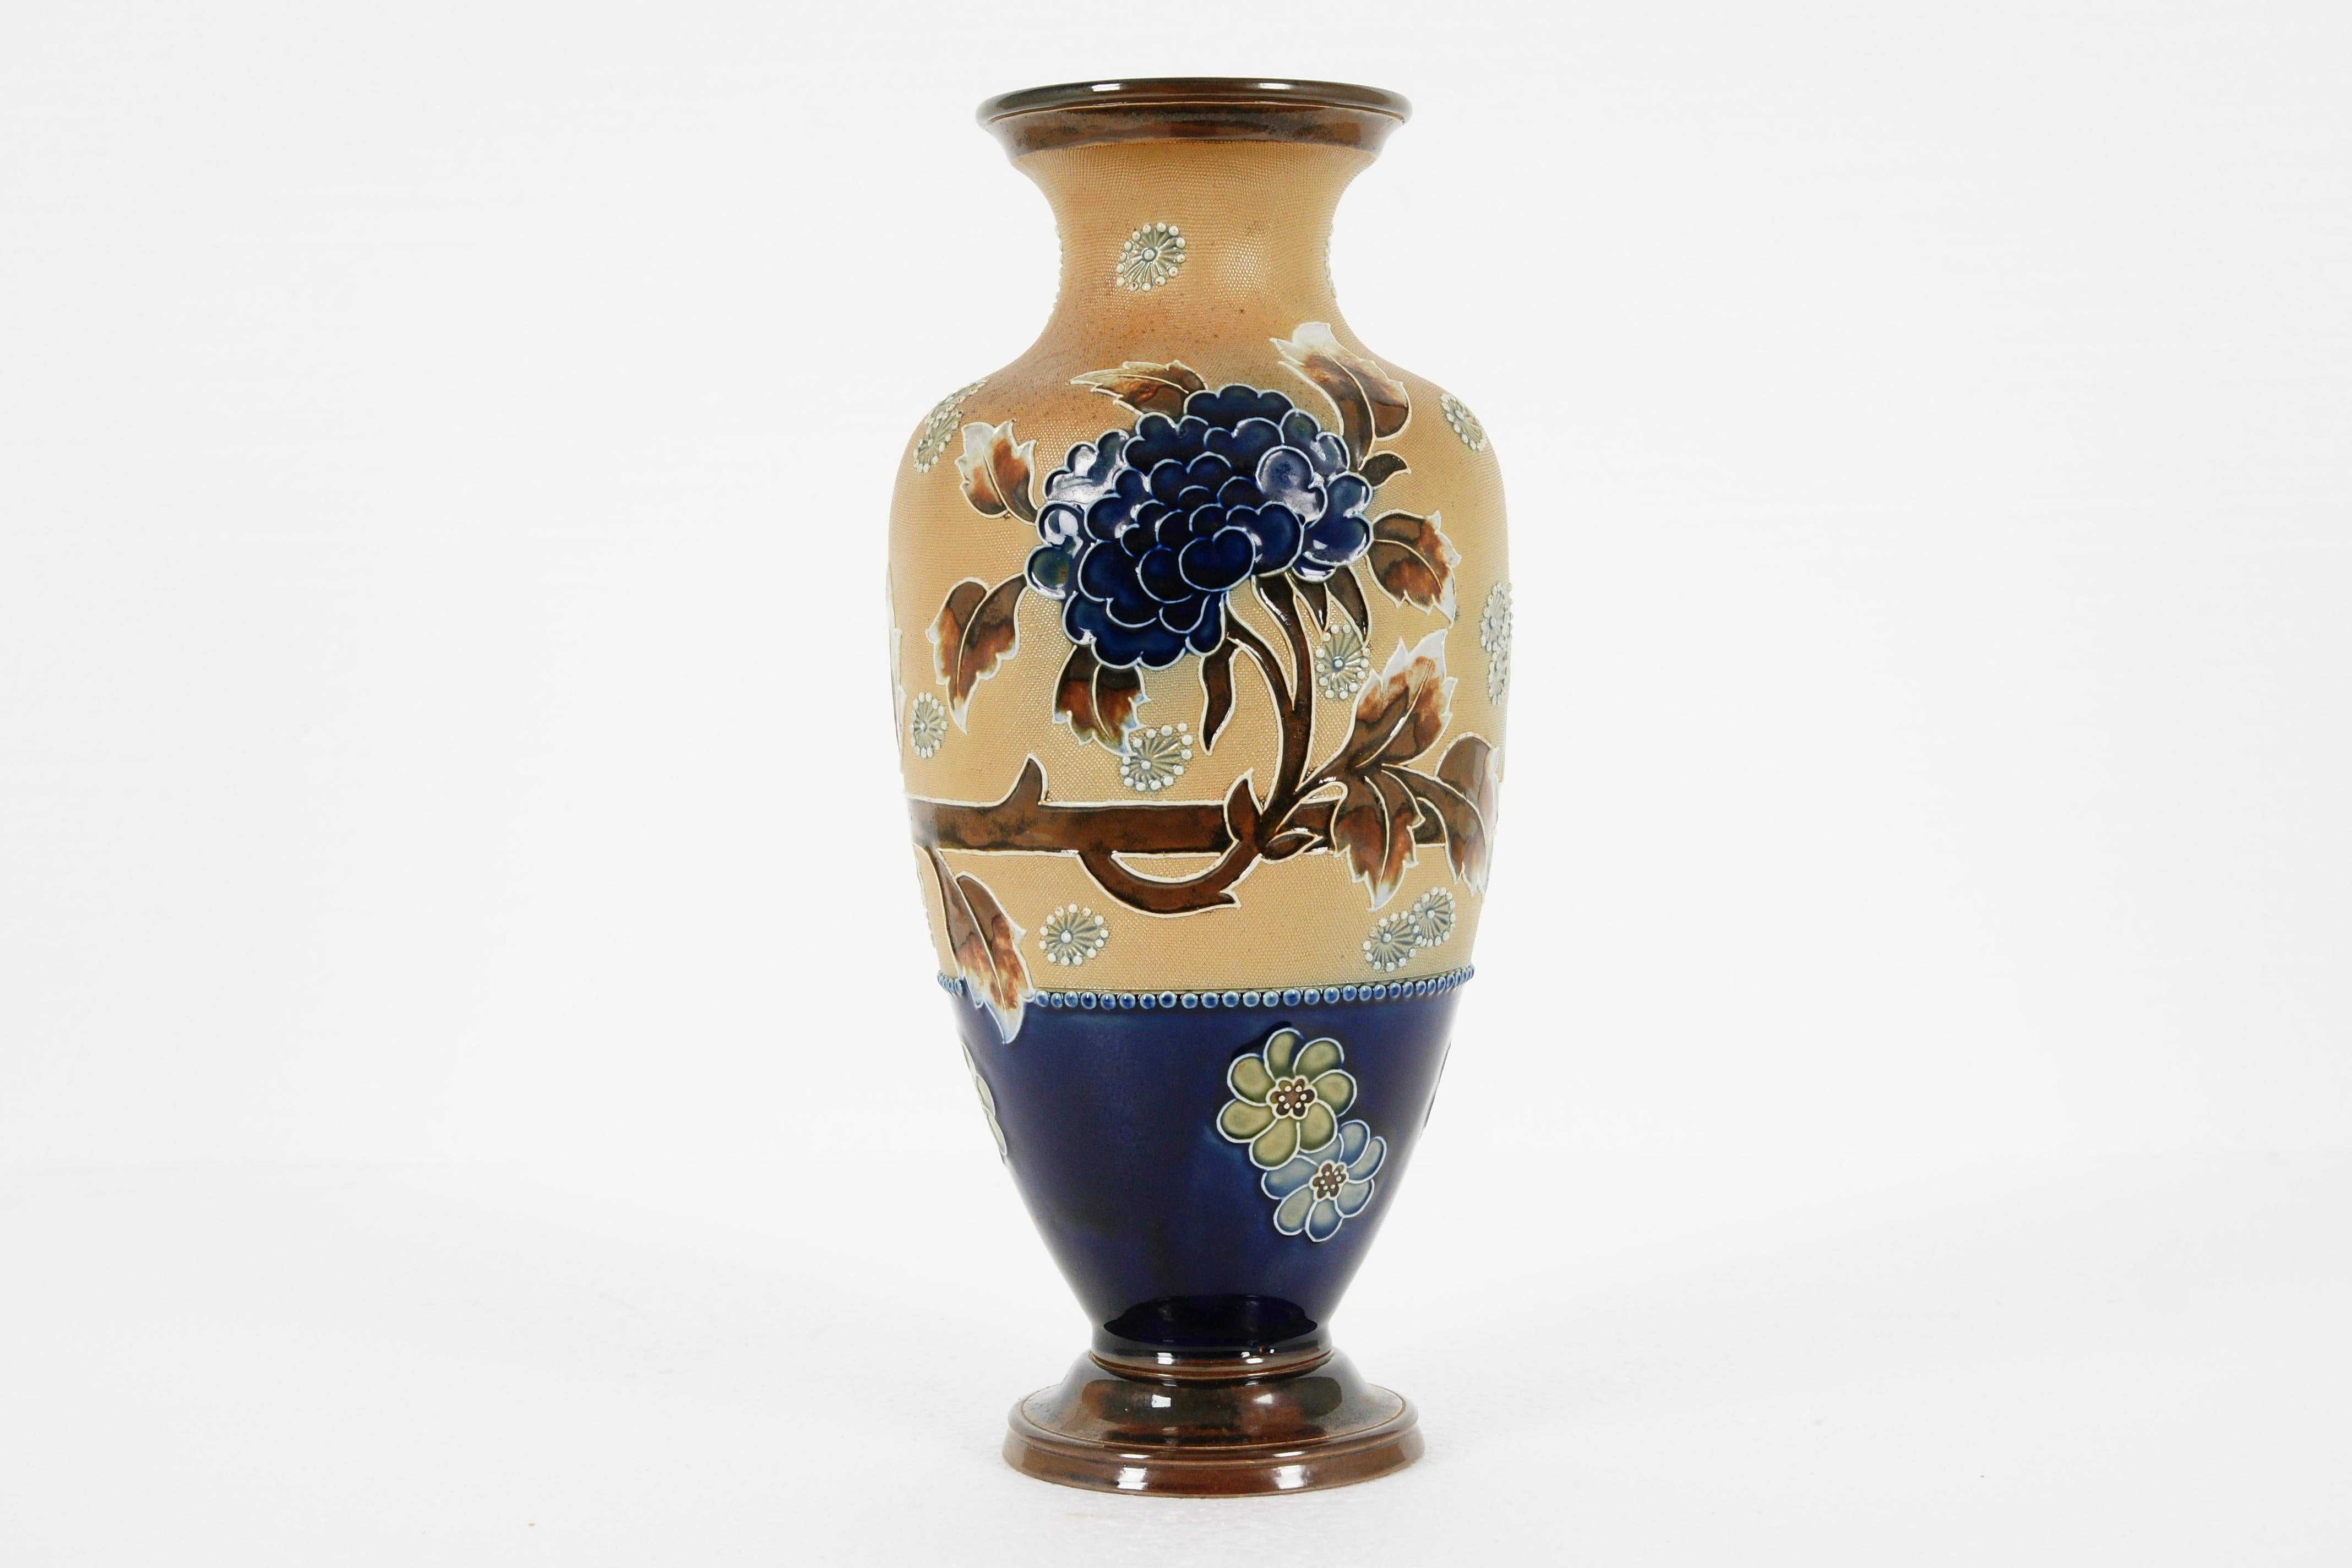 Antique Royal Doulton, slater stoneware vase, B1982

Art Nouveau floral pattern
Blue flowers
Royal Doulton marks underneath
Doulton Slater mark

B1982

Size: 6